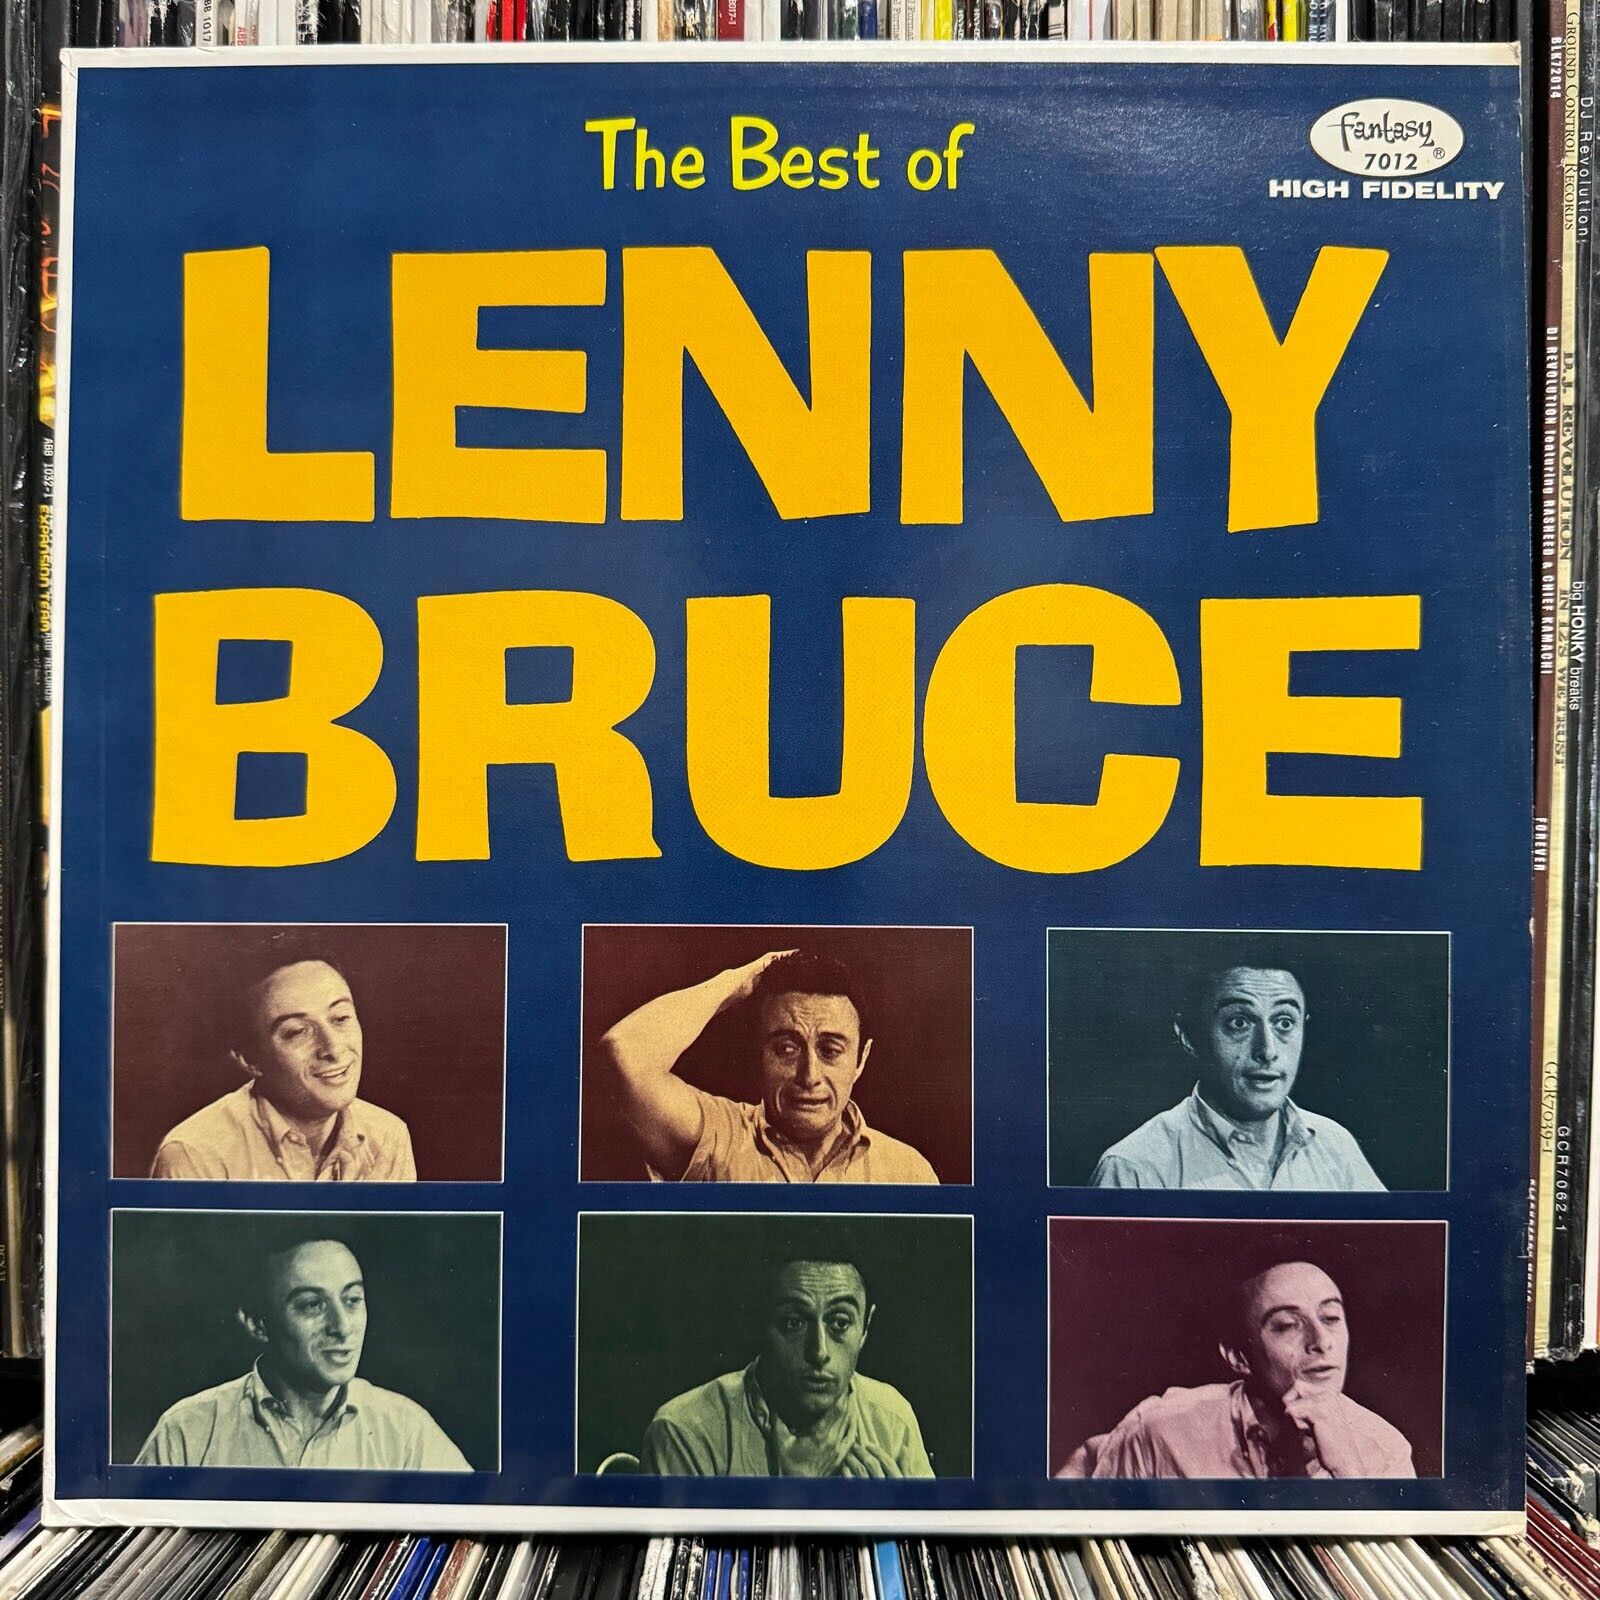 LENNY BRUCE - THE BEST OF (VINYL LP)  1962!!!  RARE!!!  FANTASY RECORDS 7012